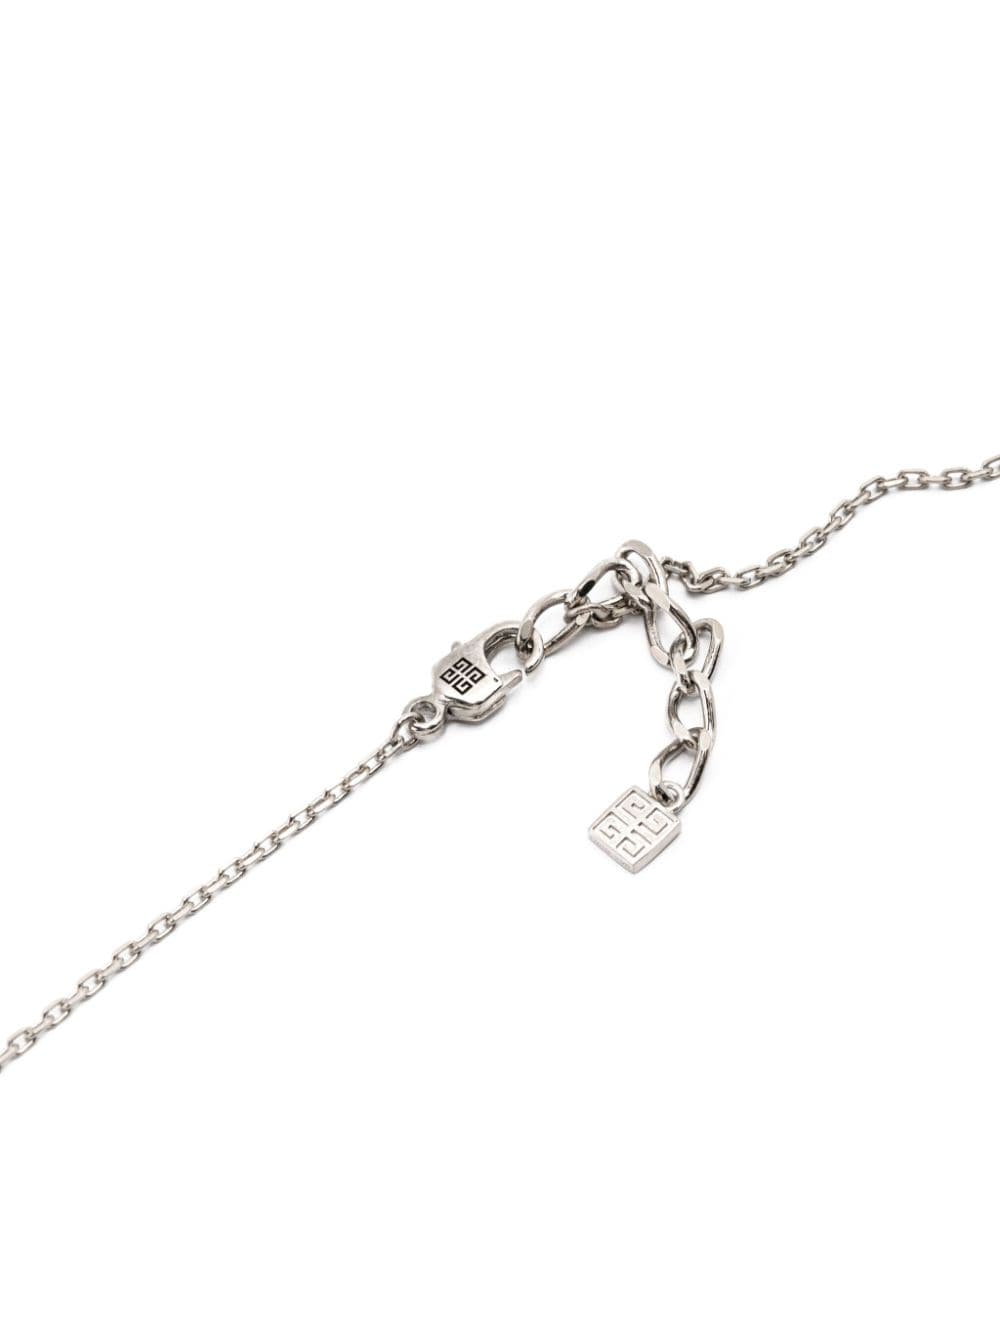 Givenchy 4G halsketting verfraaid met kristallen - Zilver